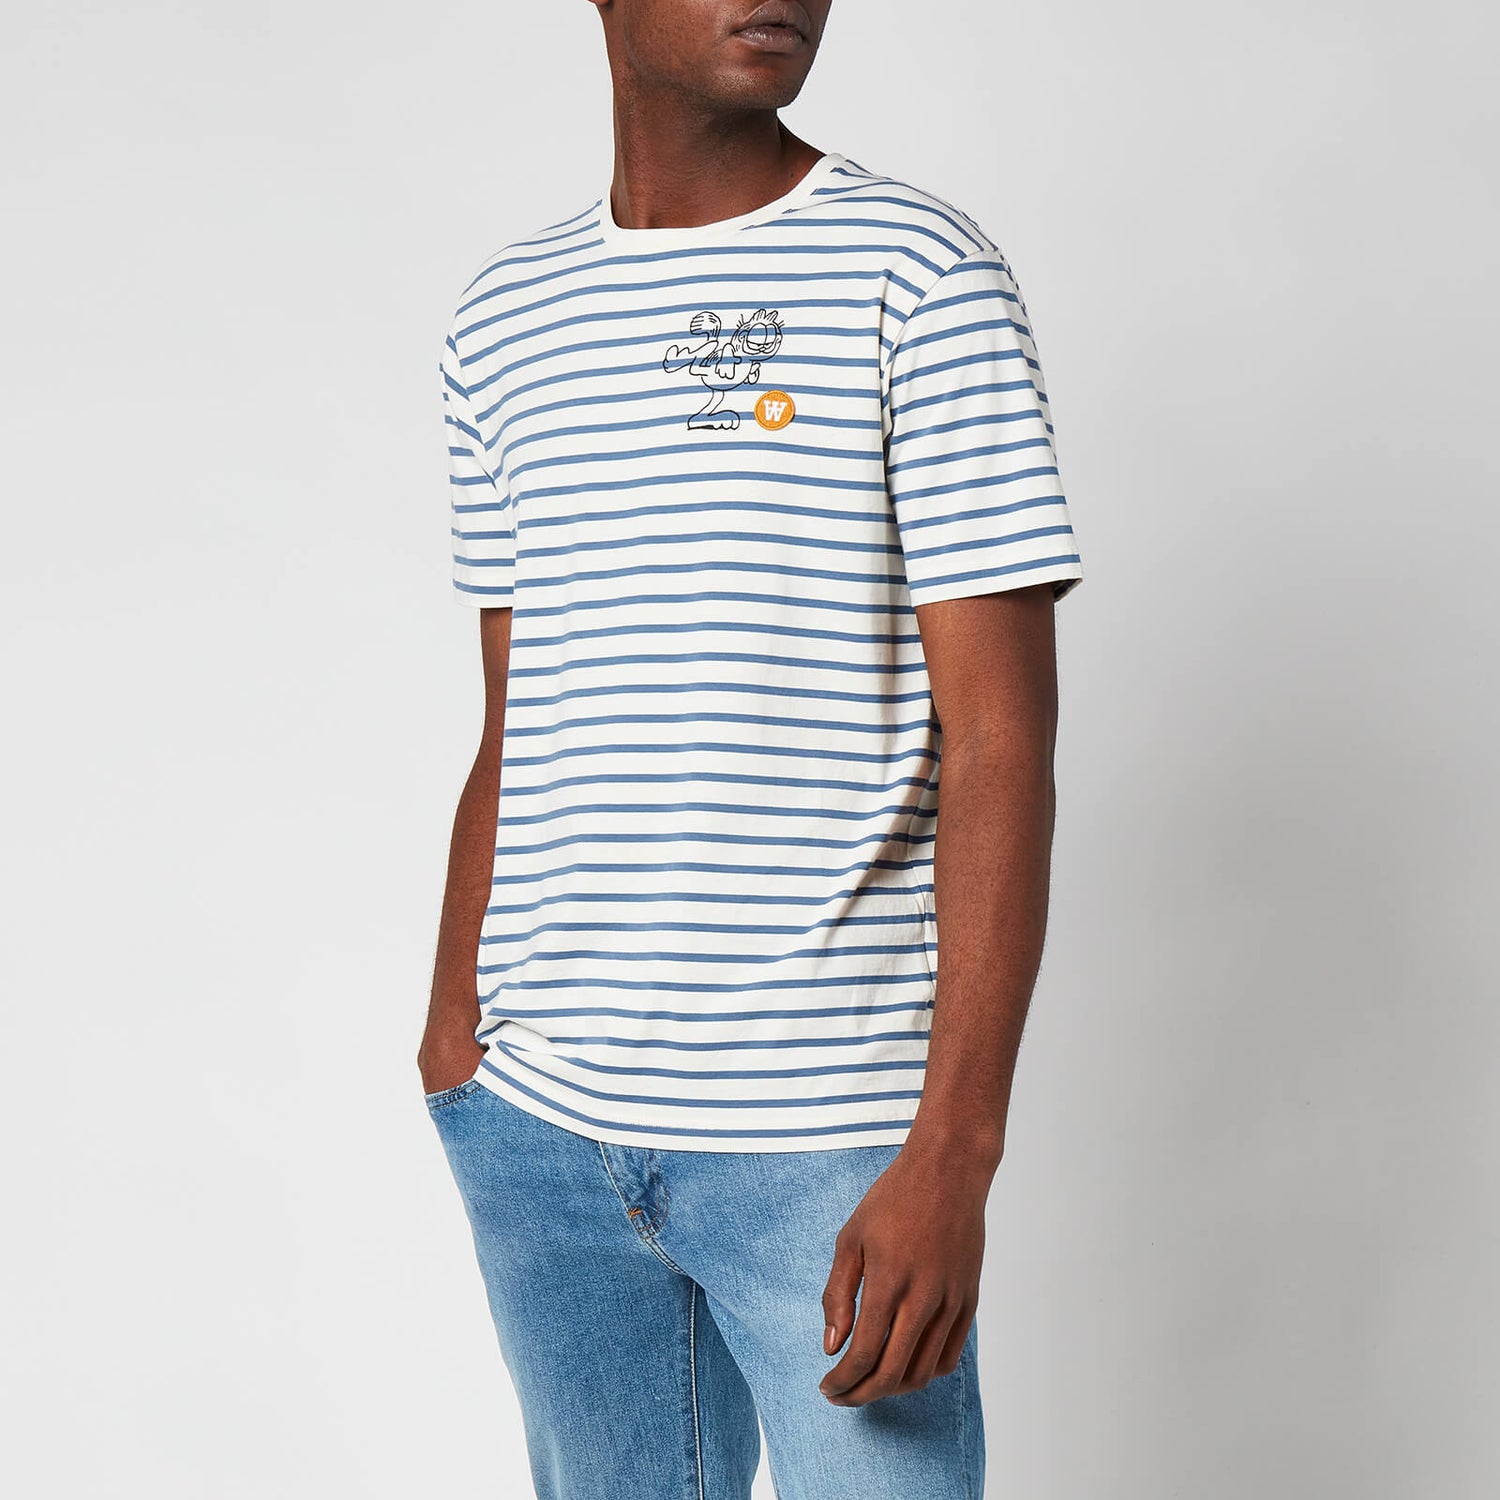 Wood Wood X Garfield Men's Ace Kick Logo T-Shirt - Off White/Blue Stripes - XXL